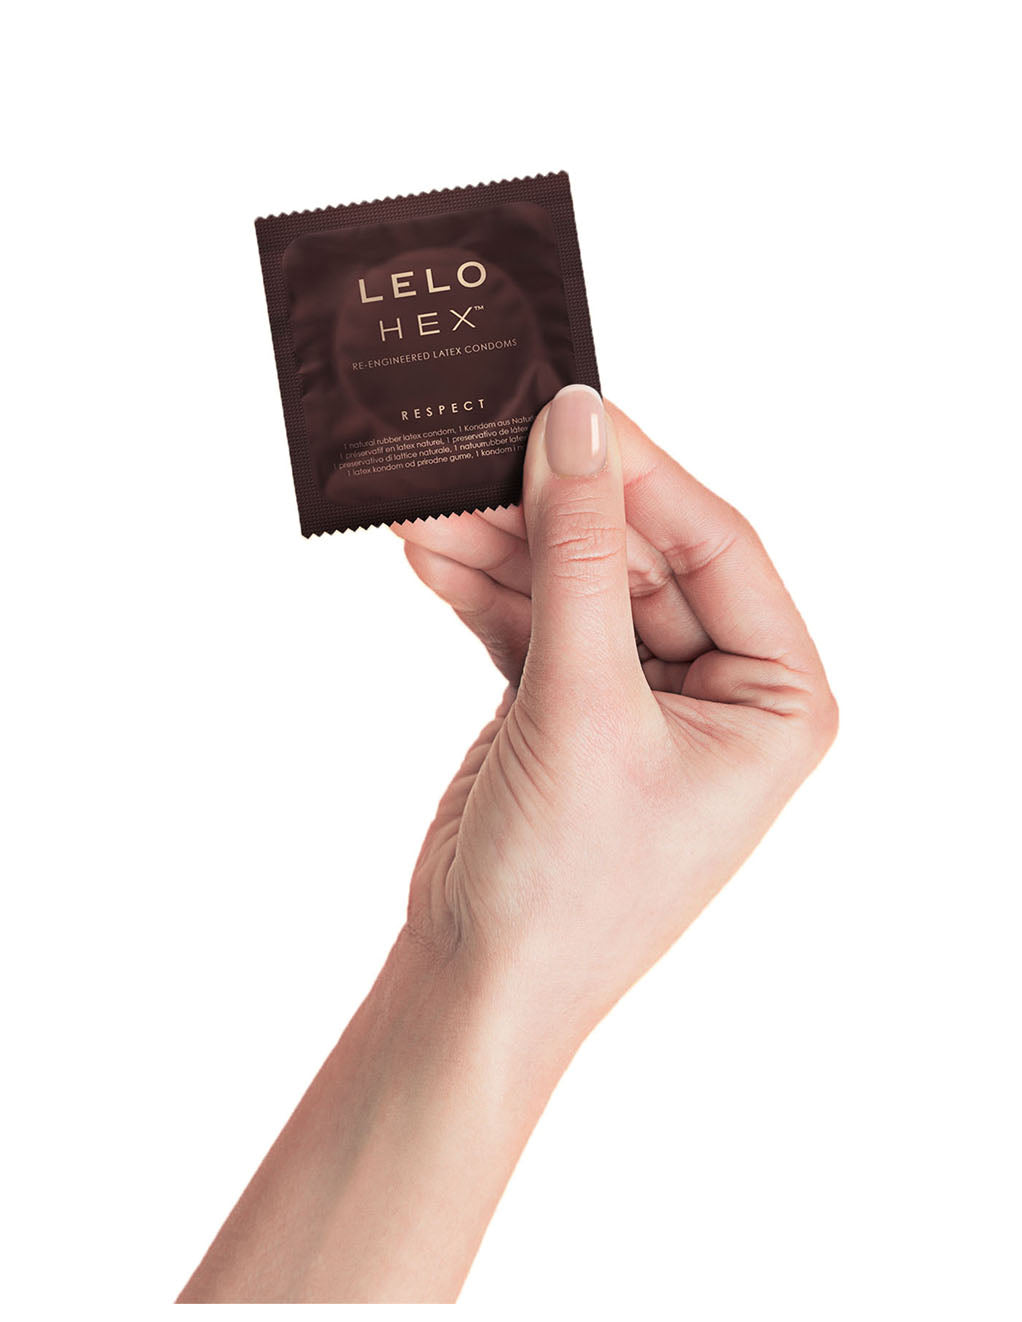 Lelo Hex Respect XL Condom- in hand